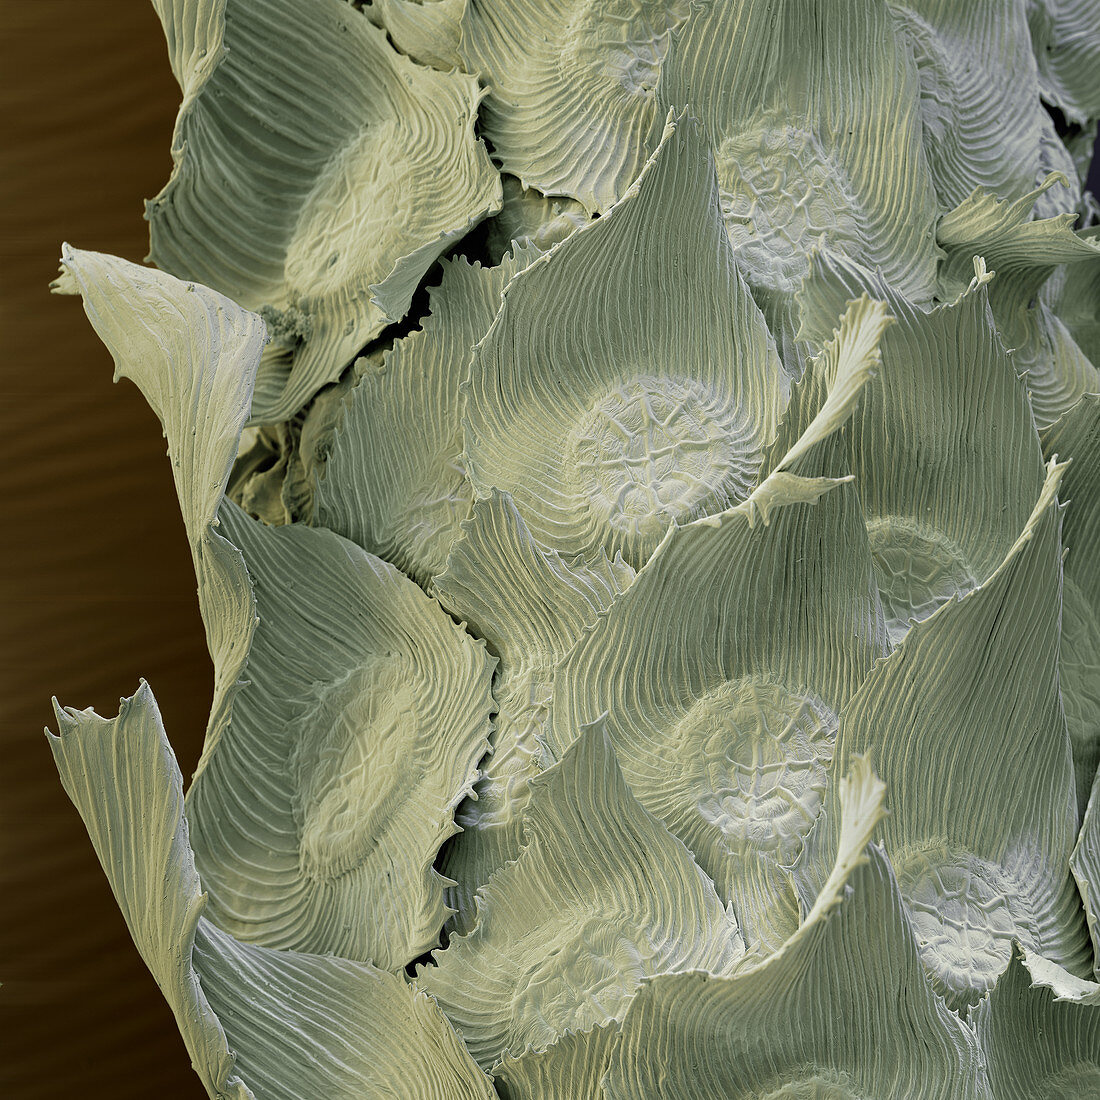 Bromeliad leaf scales SEM